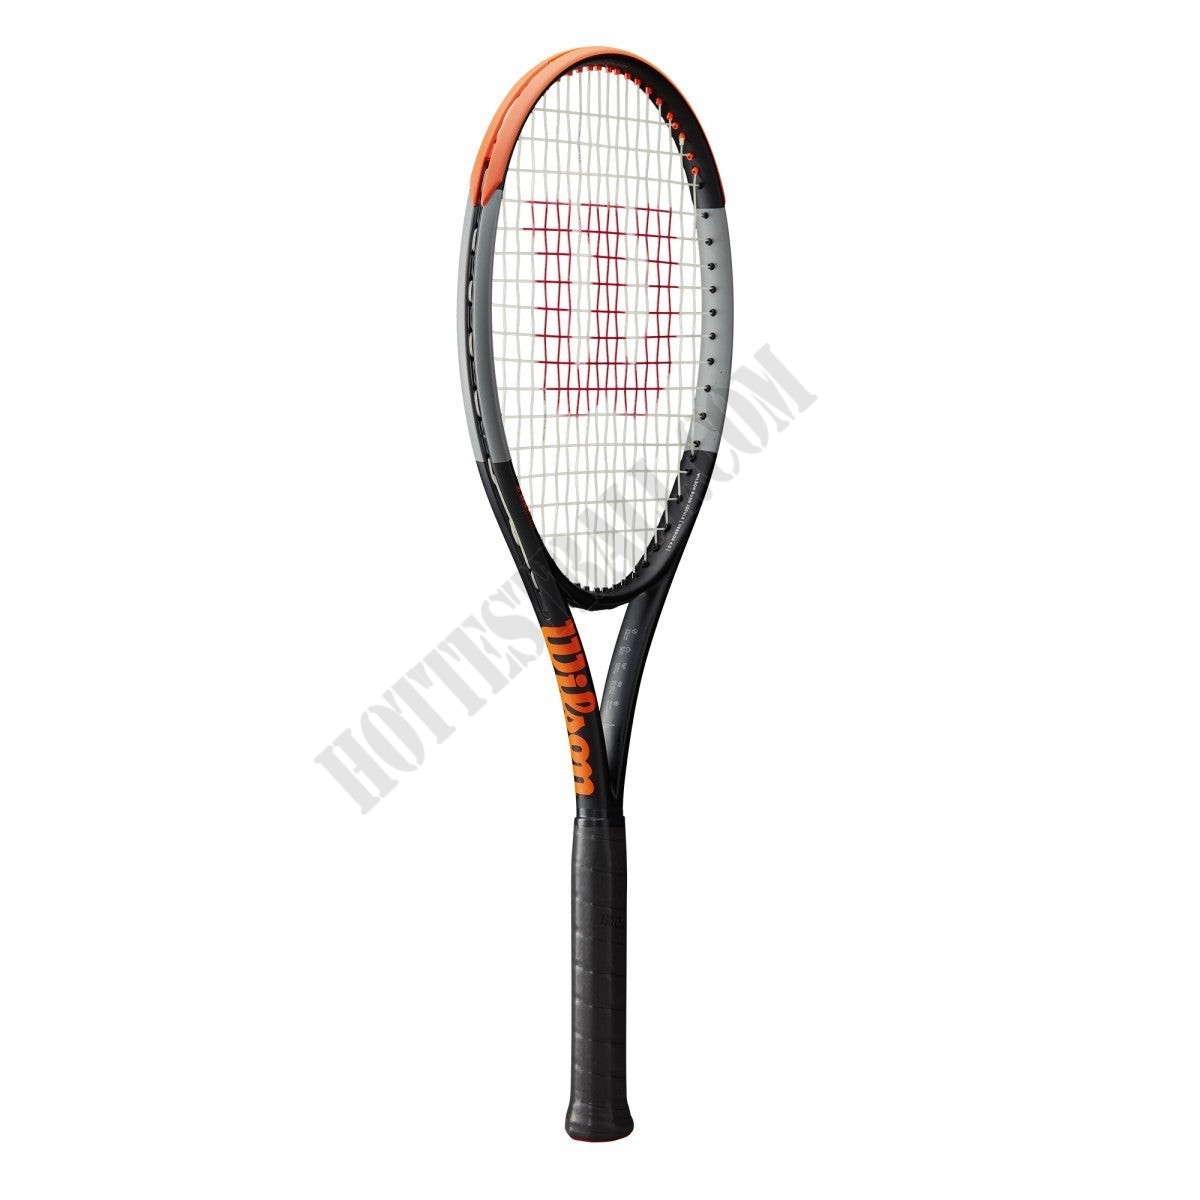 Burn 100ULS v4 Tennis Racket - Wilson Discount Store - Burn 100ULS v4 Tennis Racket - Wilson Discount Store